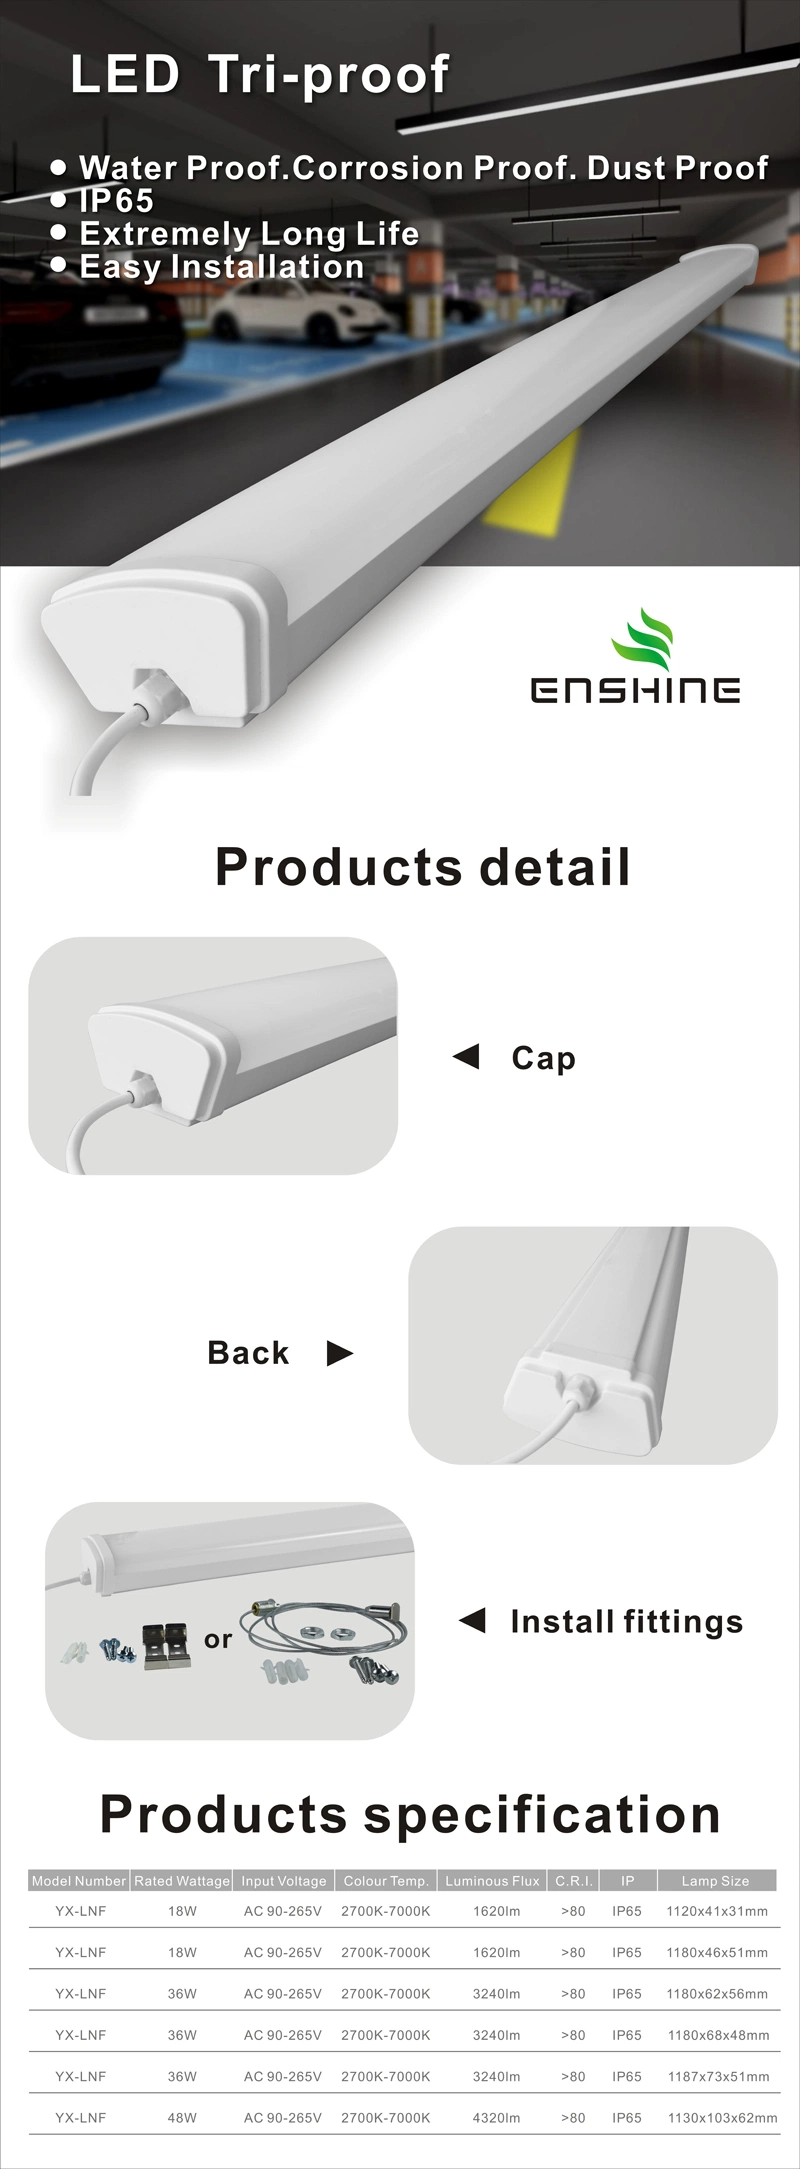 Enshine Custom Industrial Linear Batten LED Tri-Proof Light